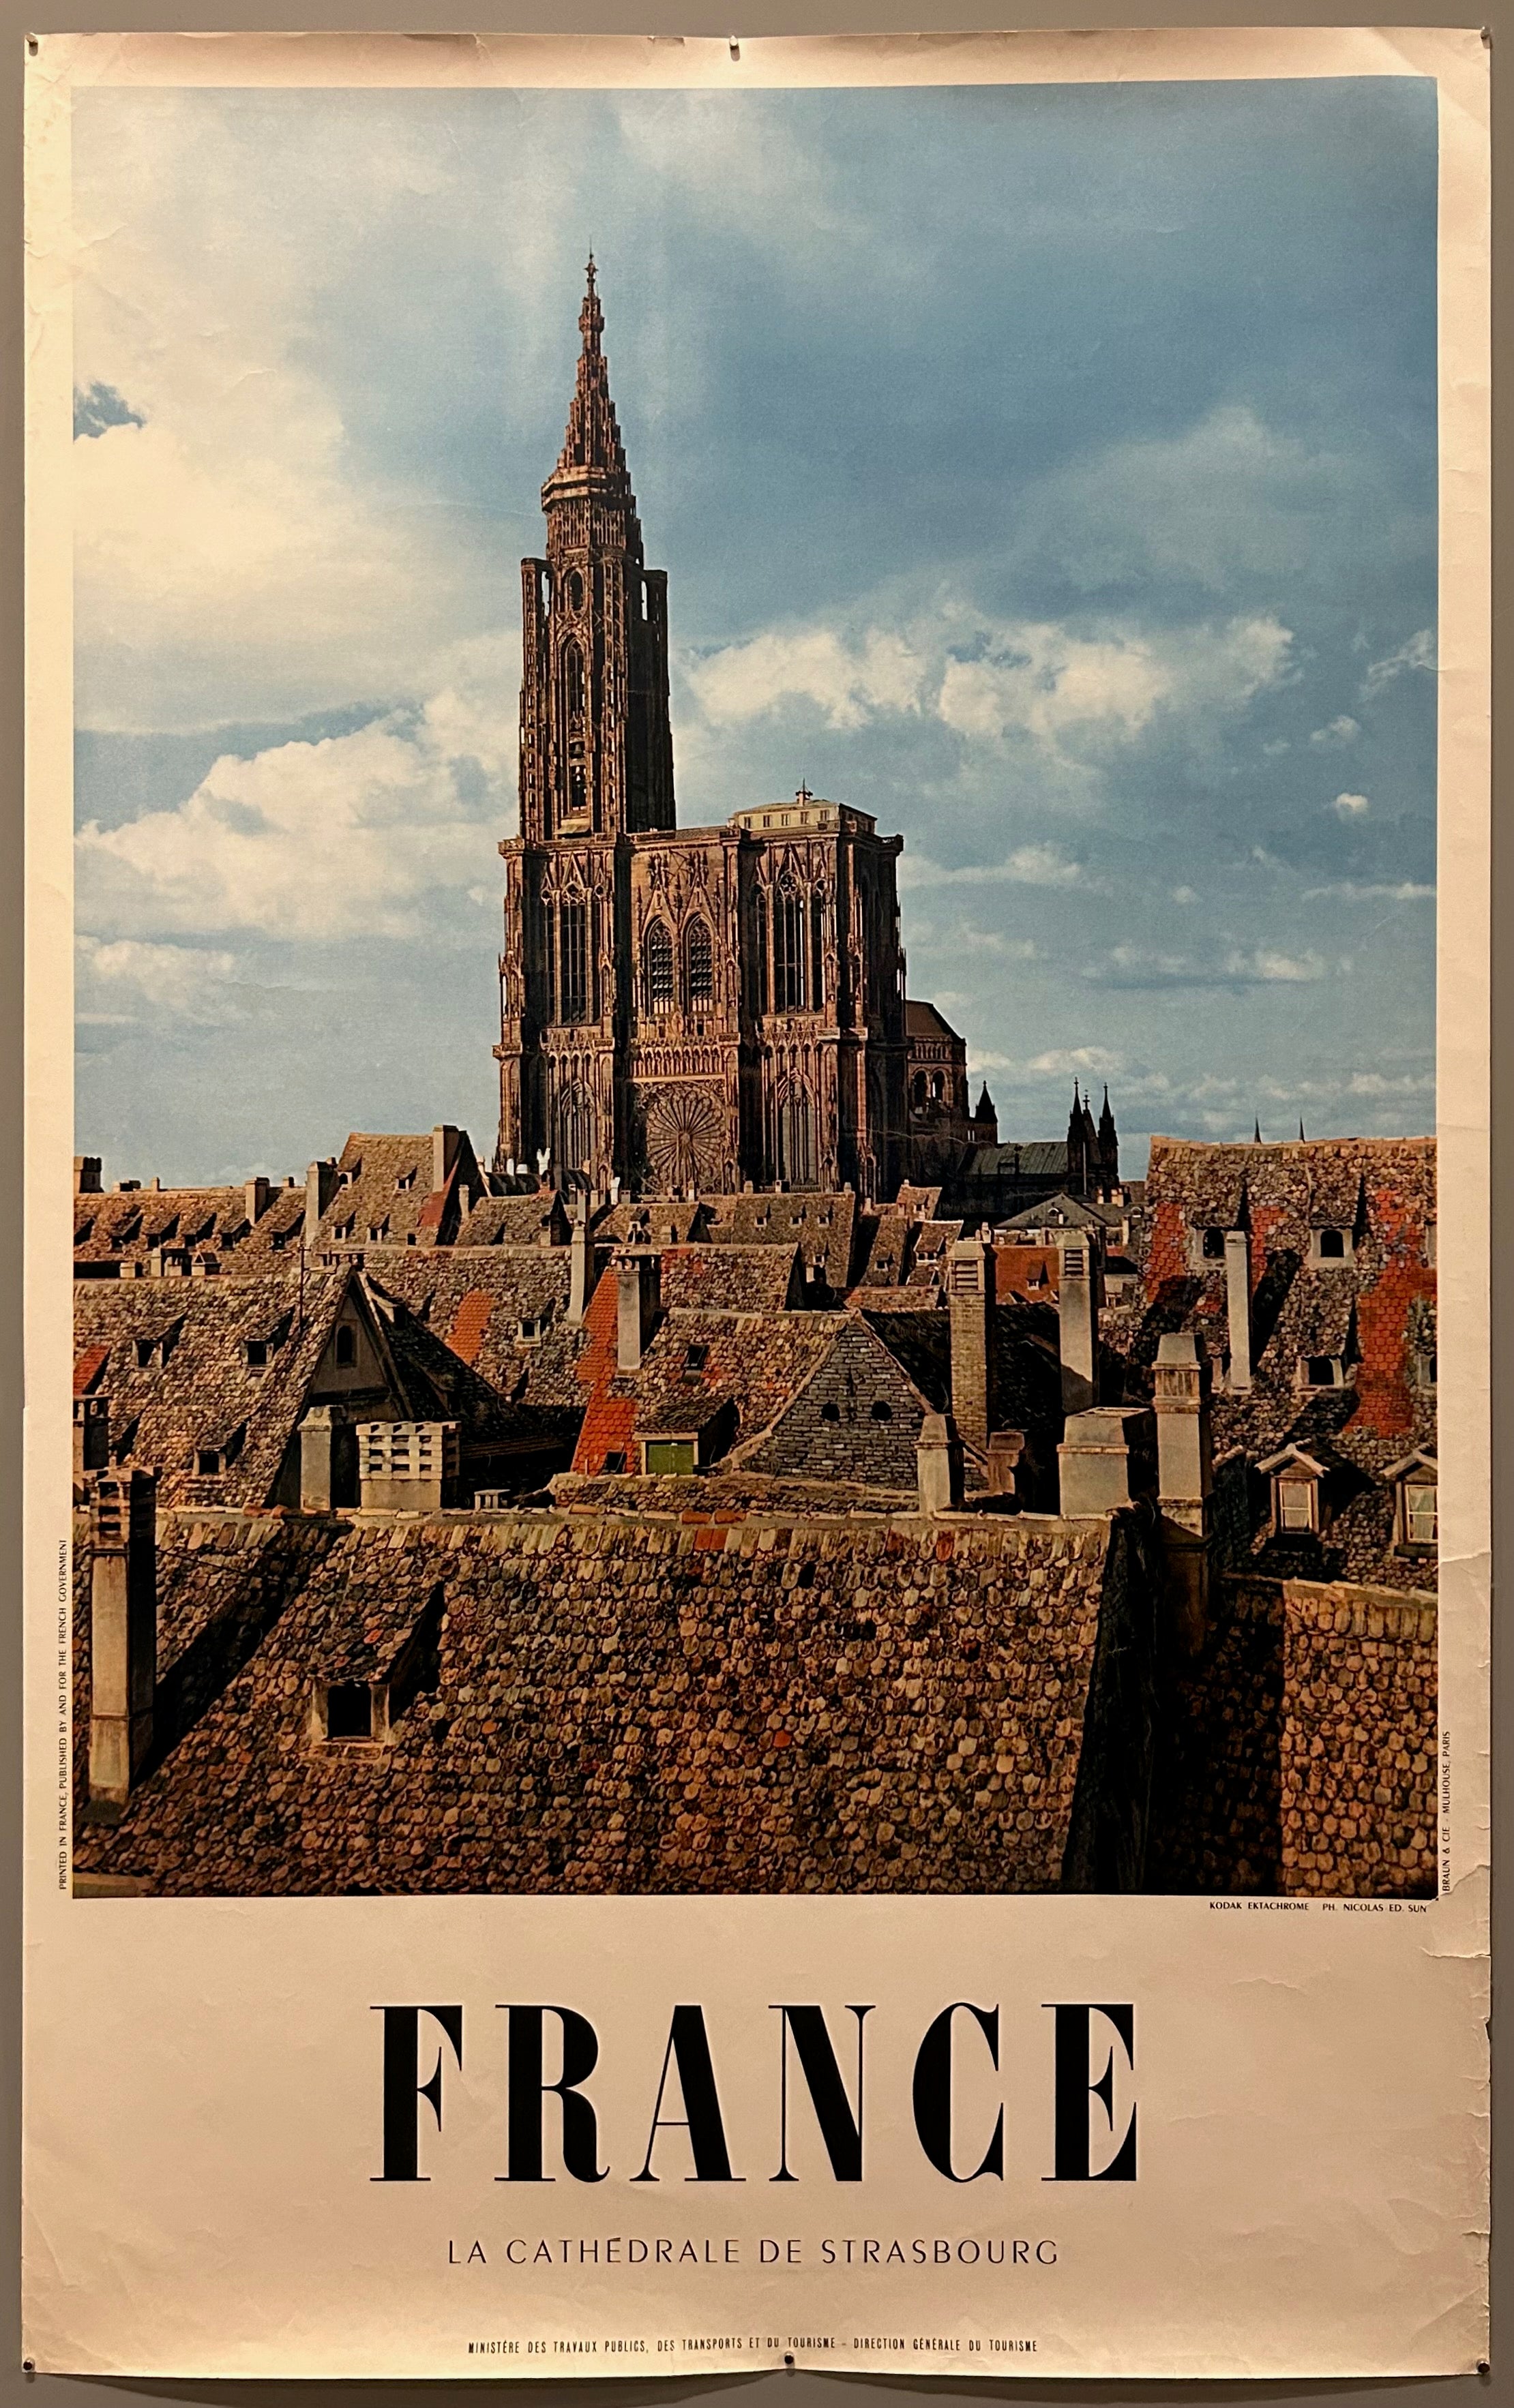 France La Cathédrale de Strasbourg Poster – Poster Museum